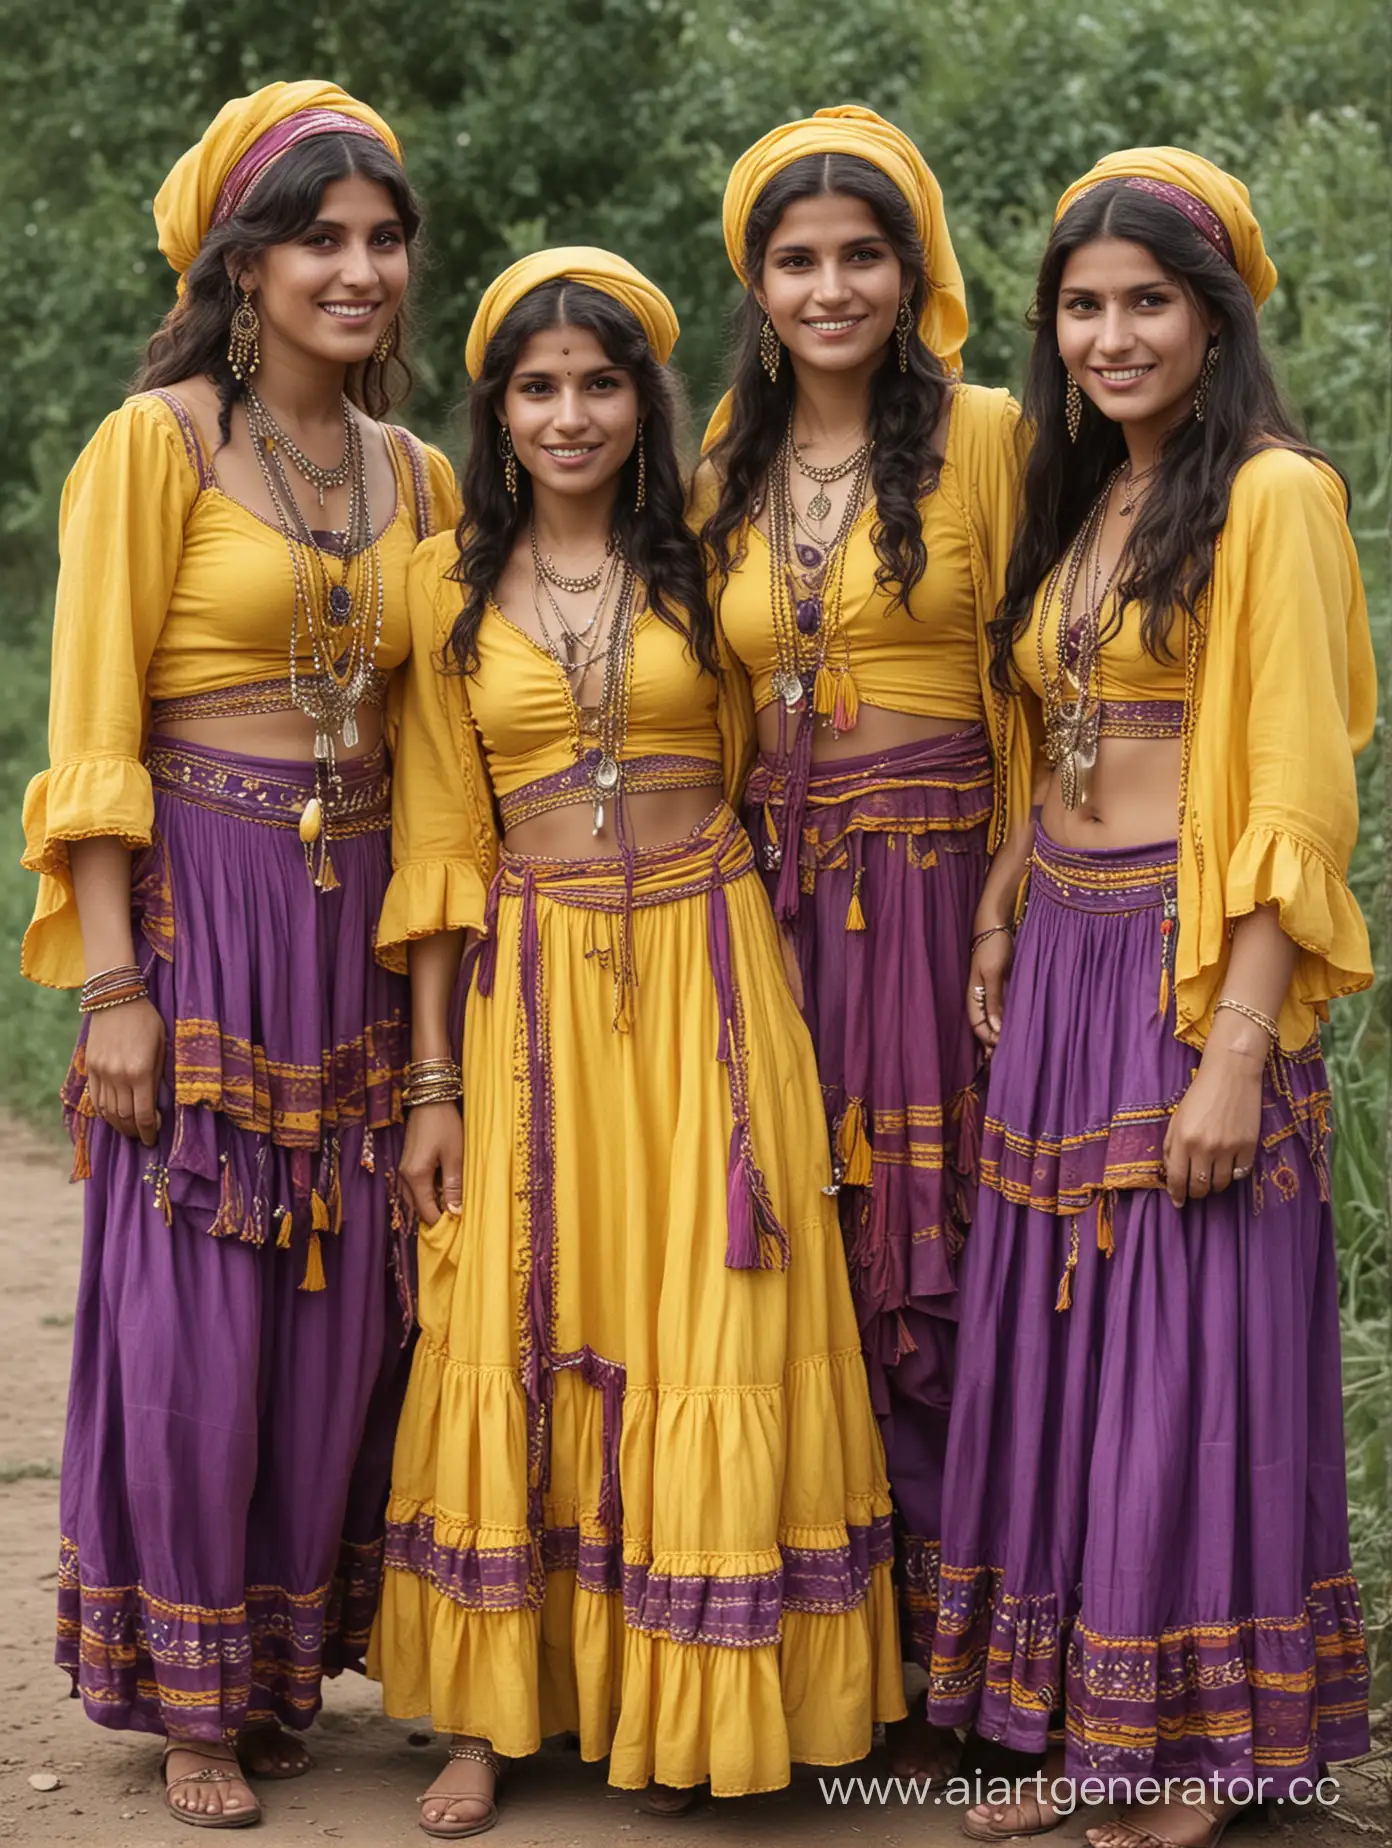 Colorful-Gypsies-in-Yellow-and-Purple-Garb-Dancing-Joyfully